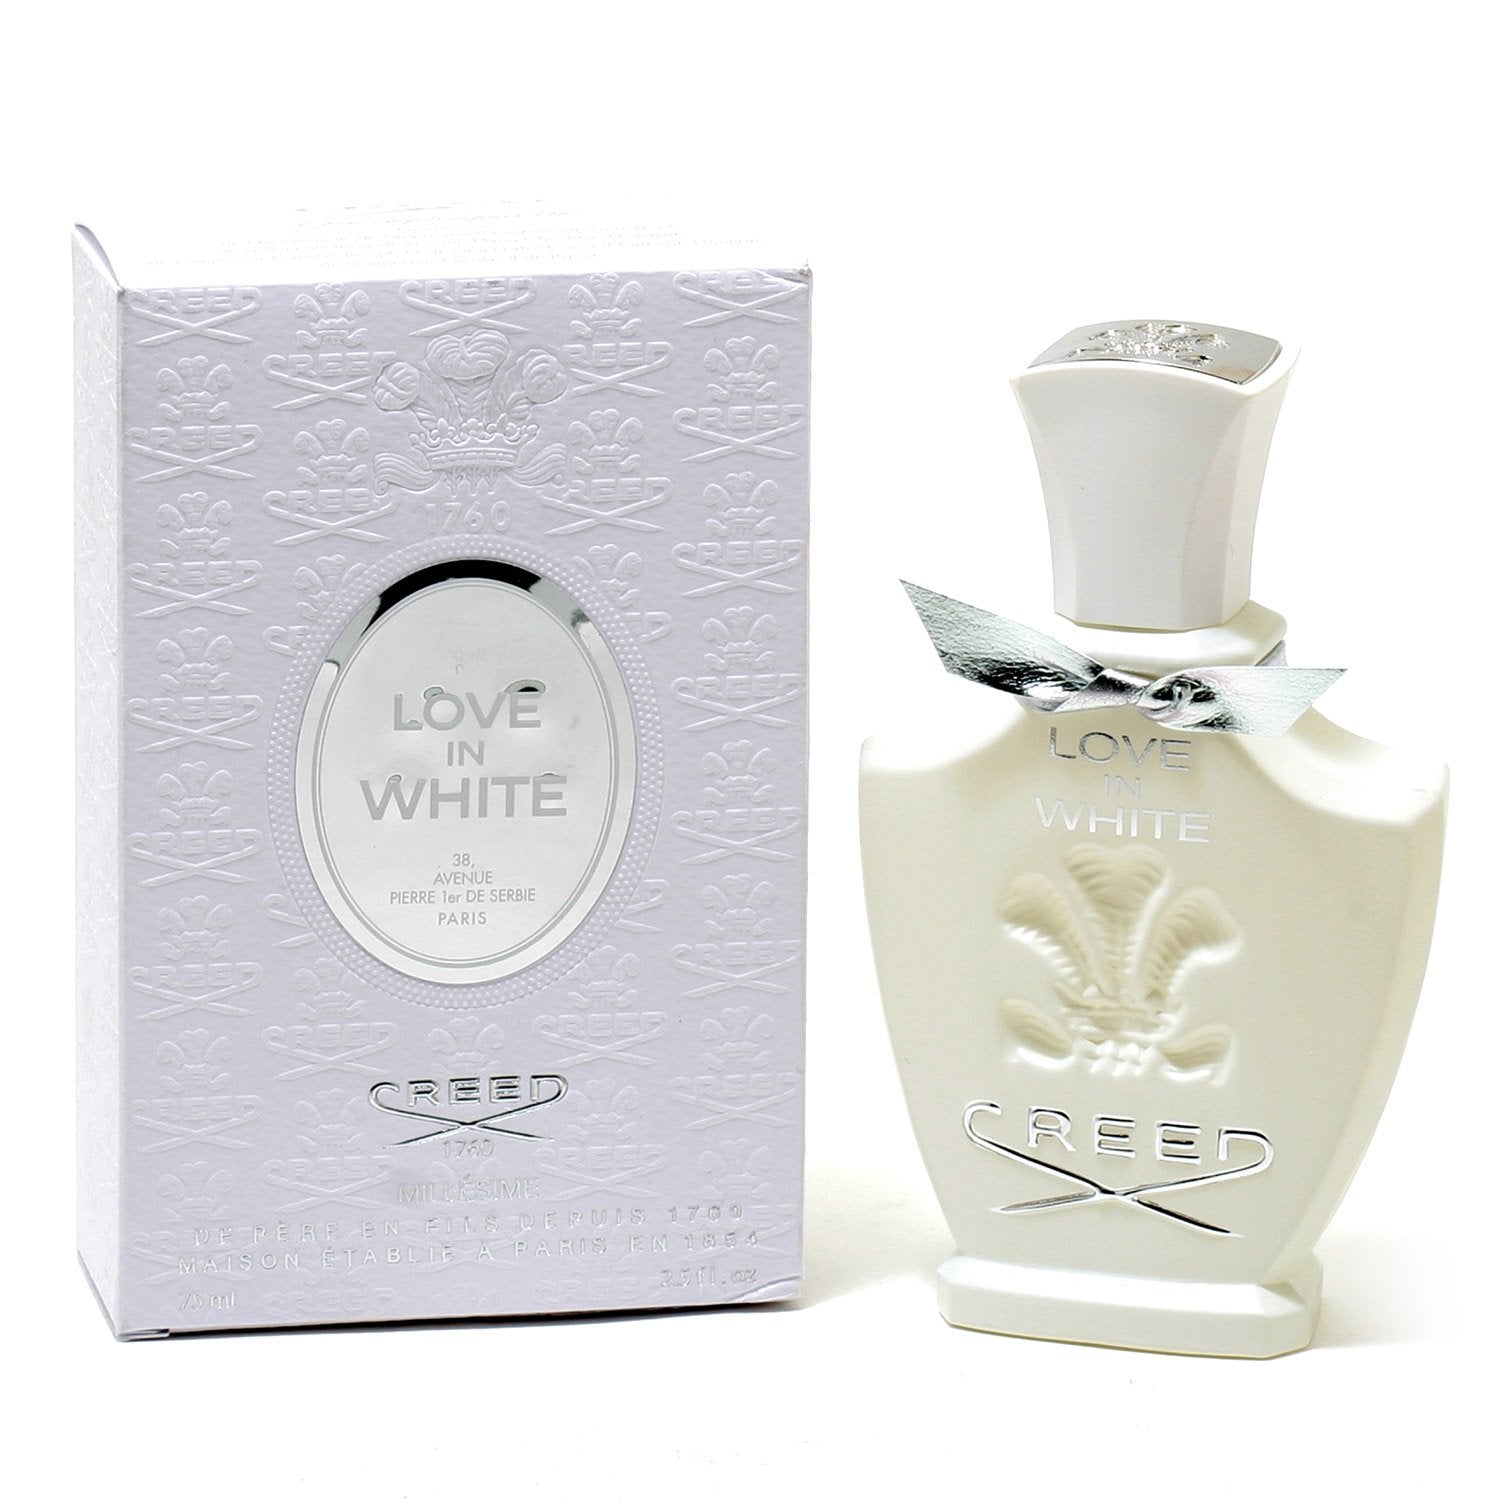 – PARFUM WOMEN WHITE OZ Fragrance LOVE FOR DE CREED Room EAU - SPRAY, 2.5 IN